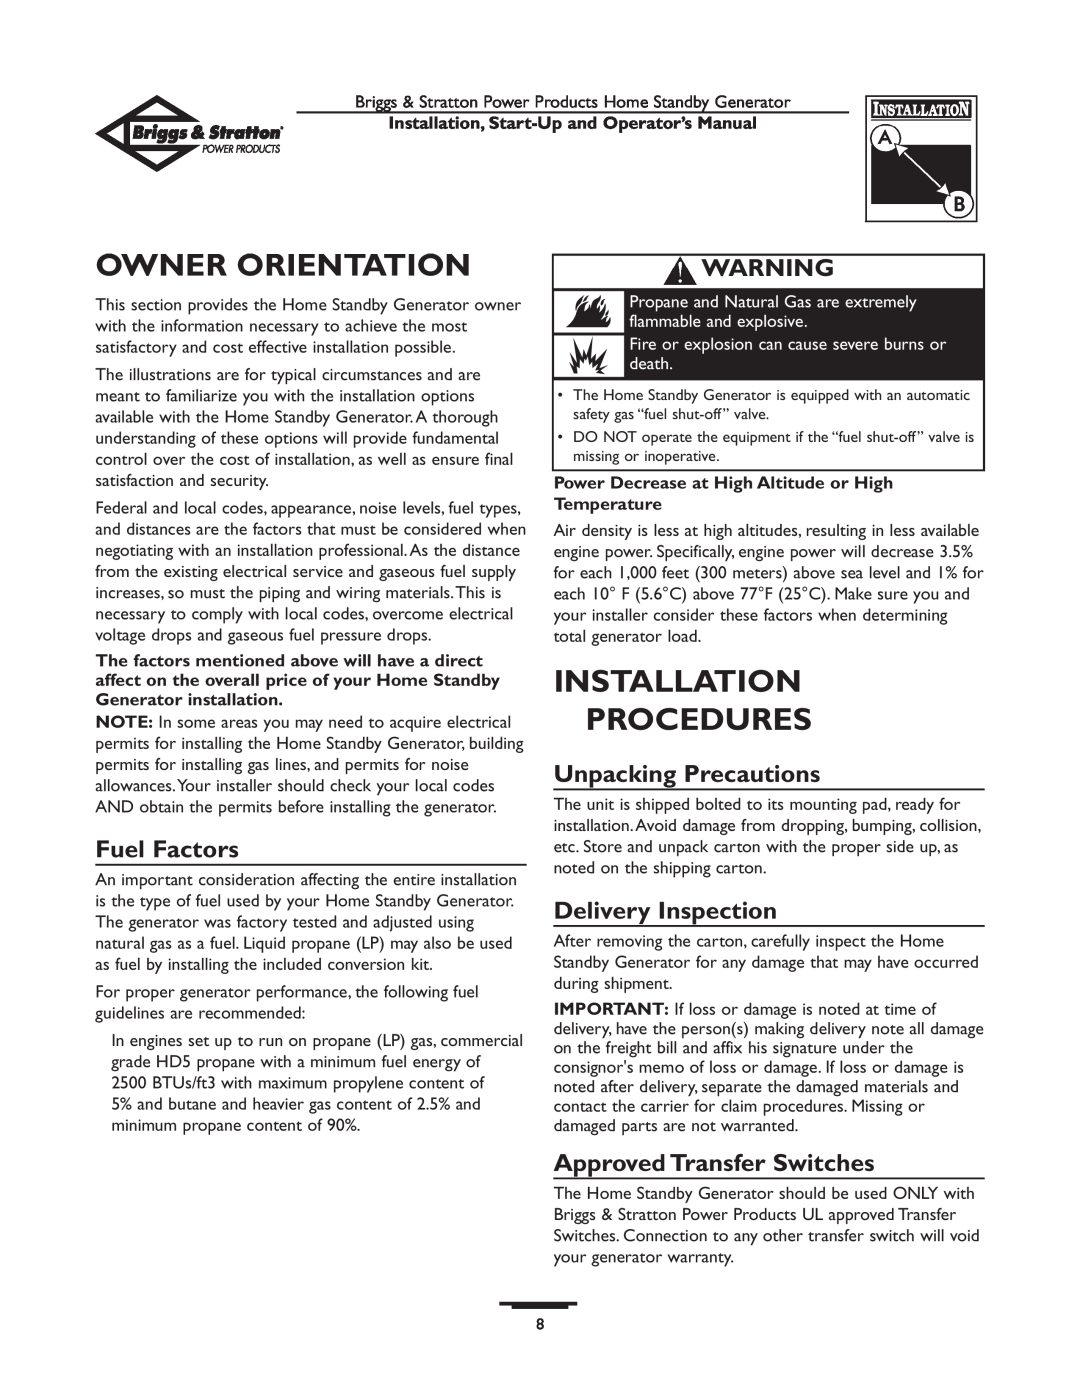 Briggs & Stratton 01897-0 manual Owner Orientation, Installation Procedures, Fuel Factors, Unpacking Precautions 